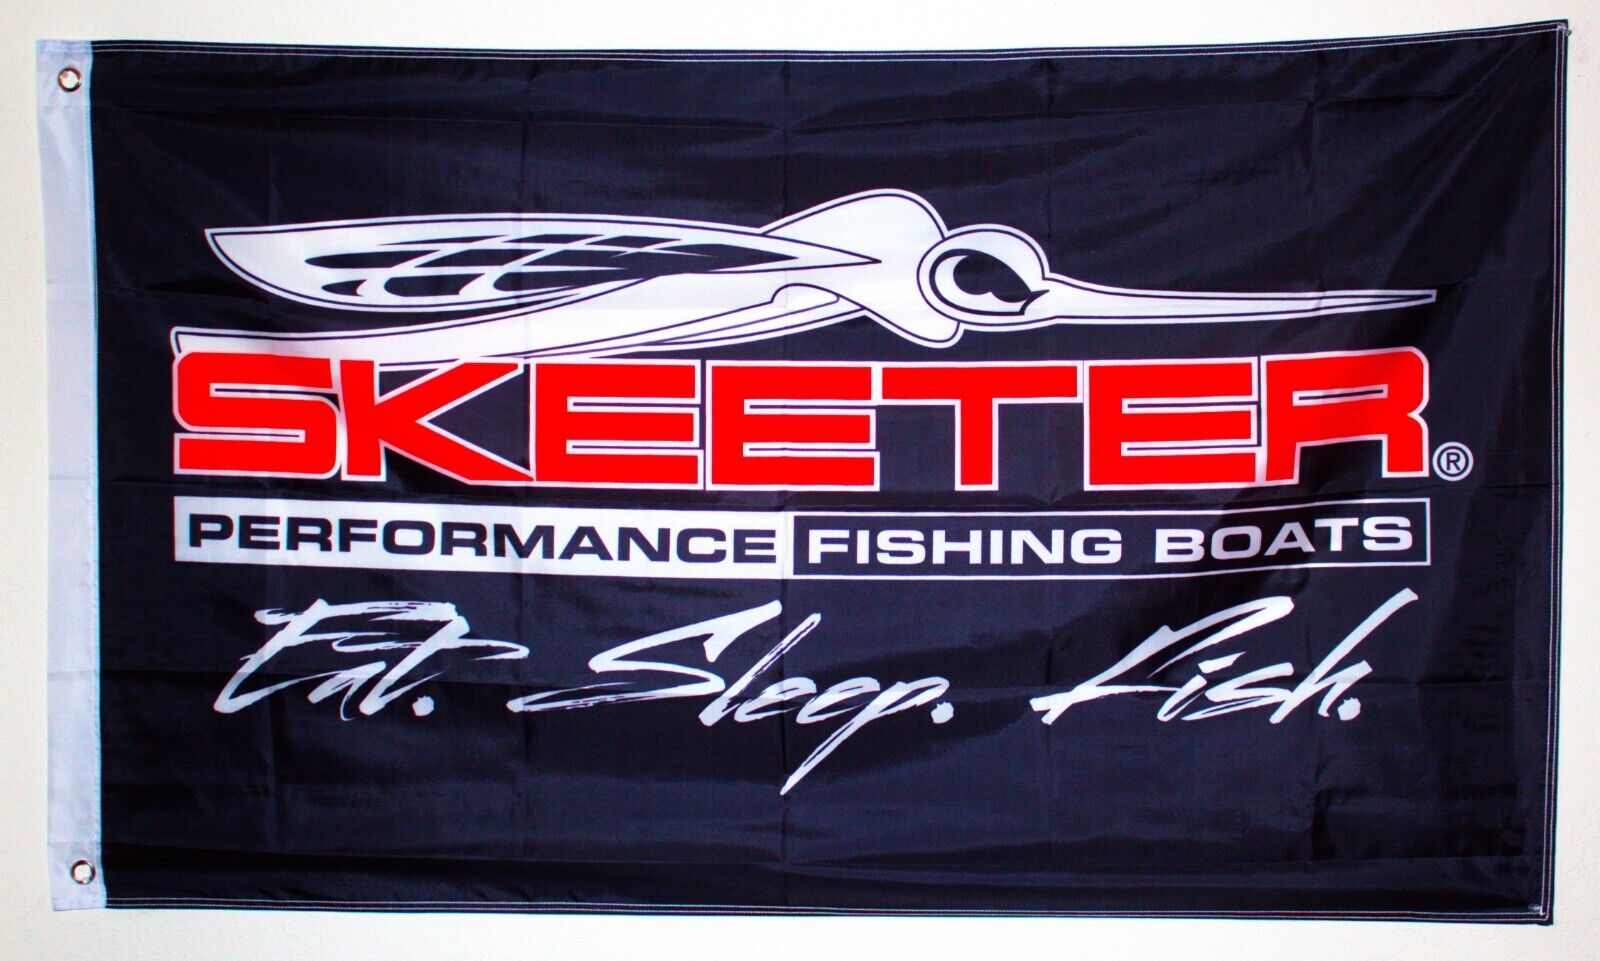 SKEETER Performance Fishing Boats, Eat. Sleep. Fish. - Flag Banner 3'x5'